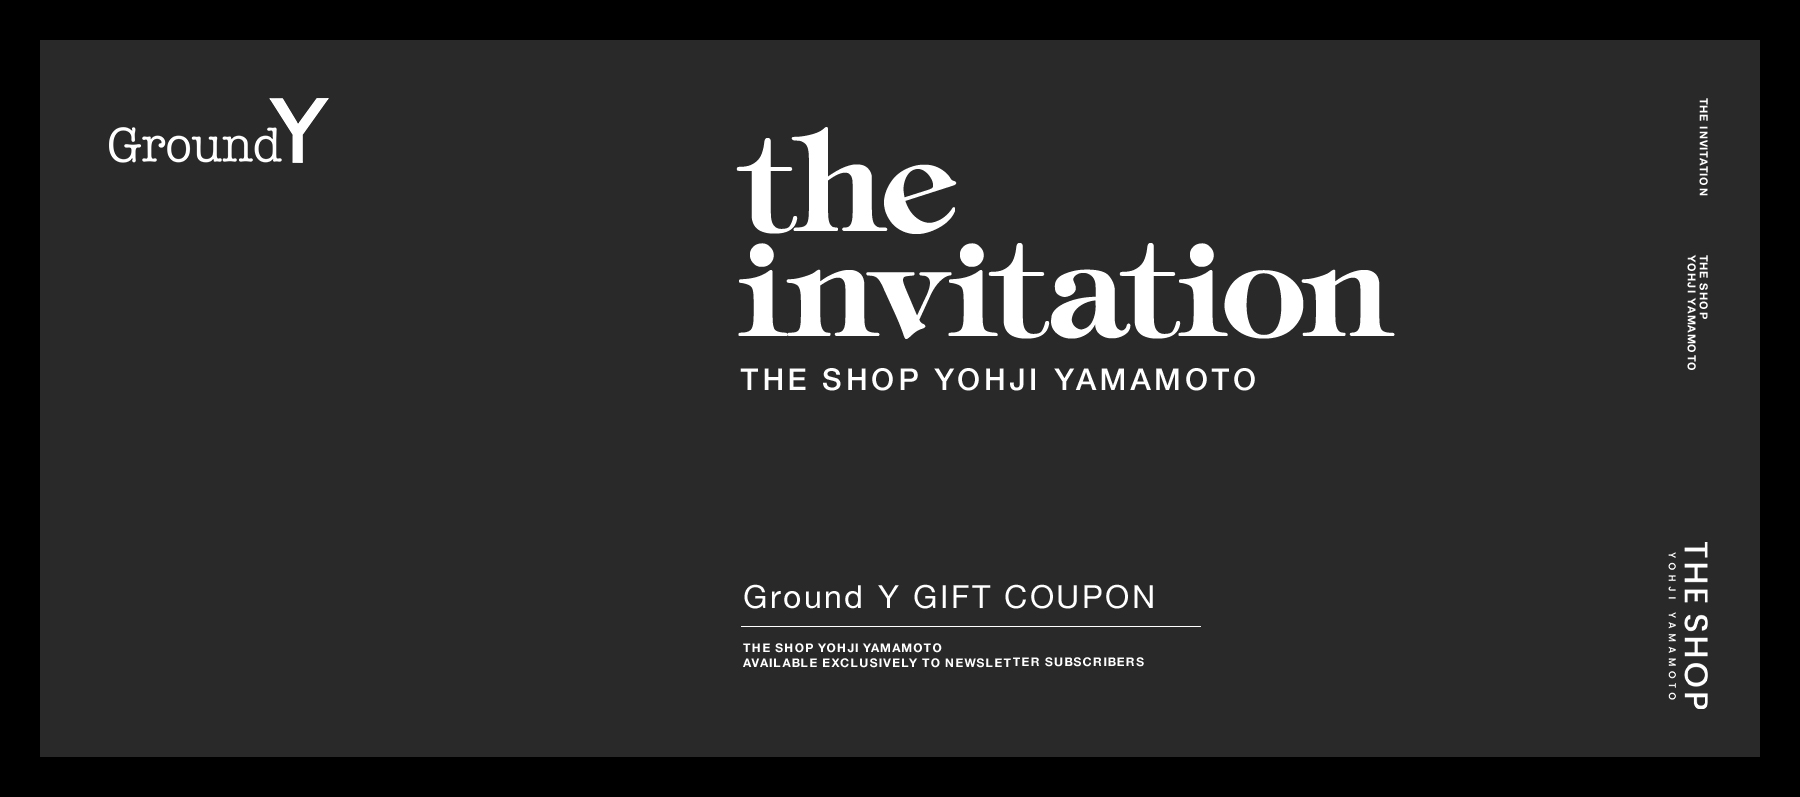 Ground Y Invitation